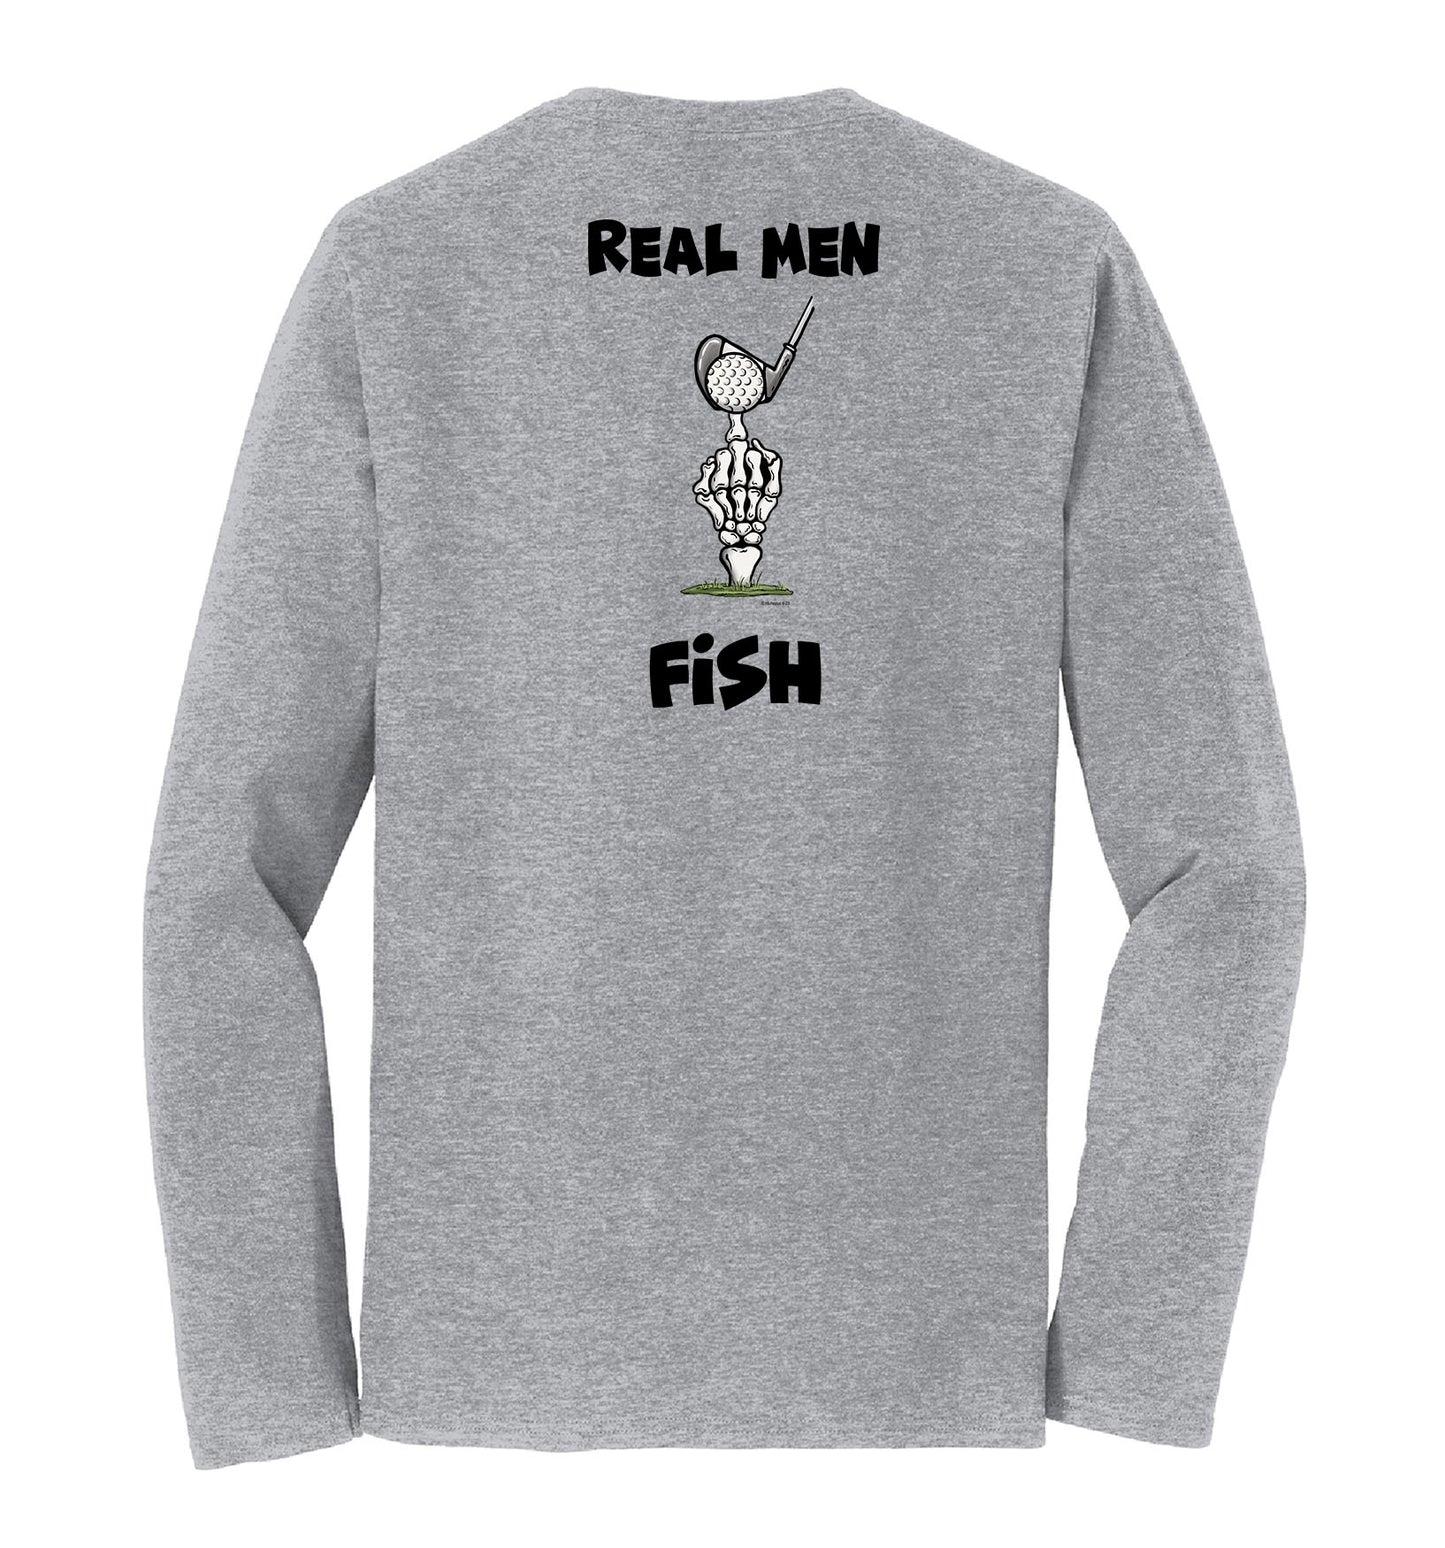 Real Men Fish - Unisex Long Sleeve Tee